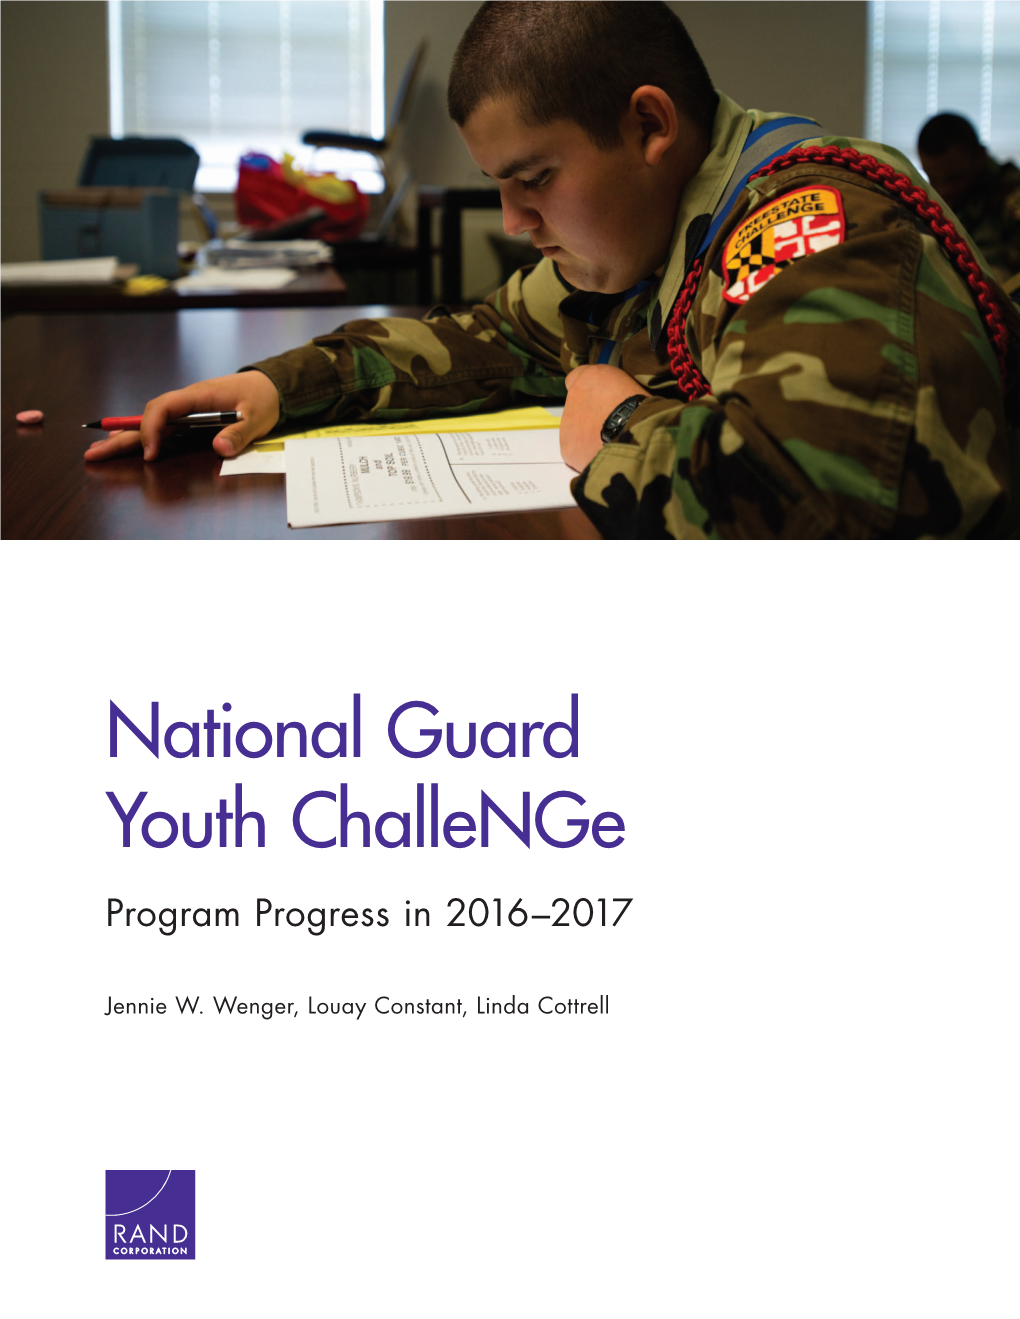 National Guard Youth Challenge: Program Progress in 2016-2017